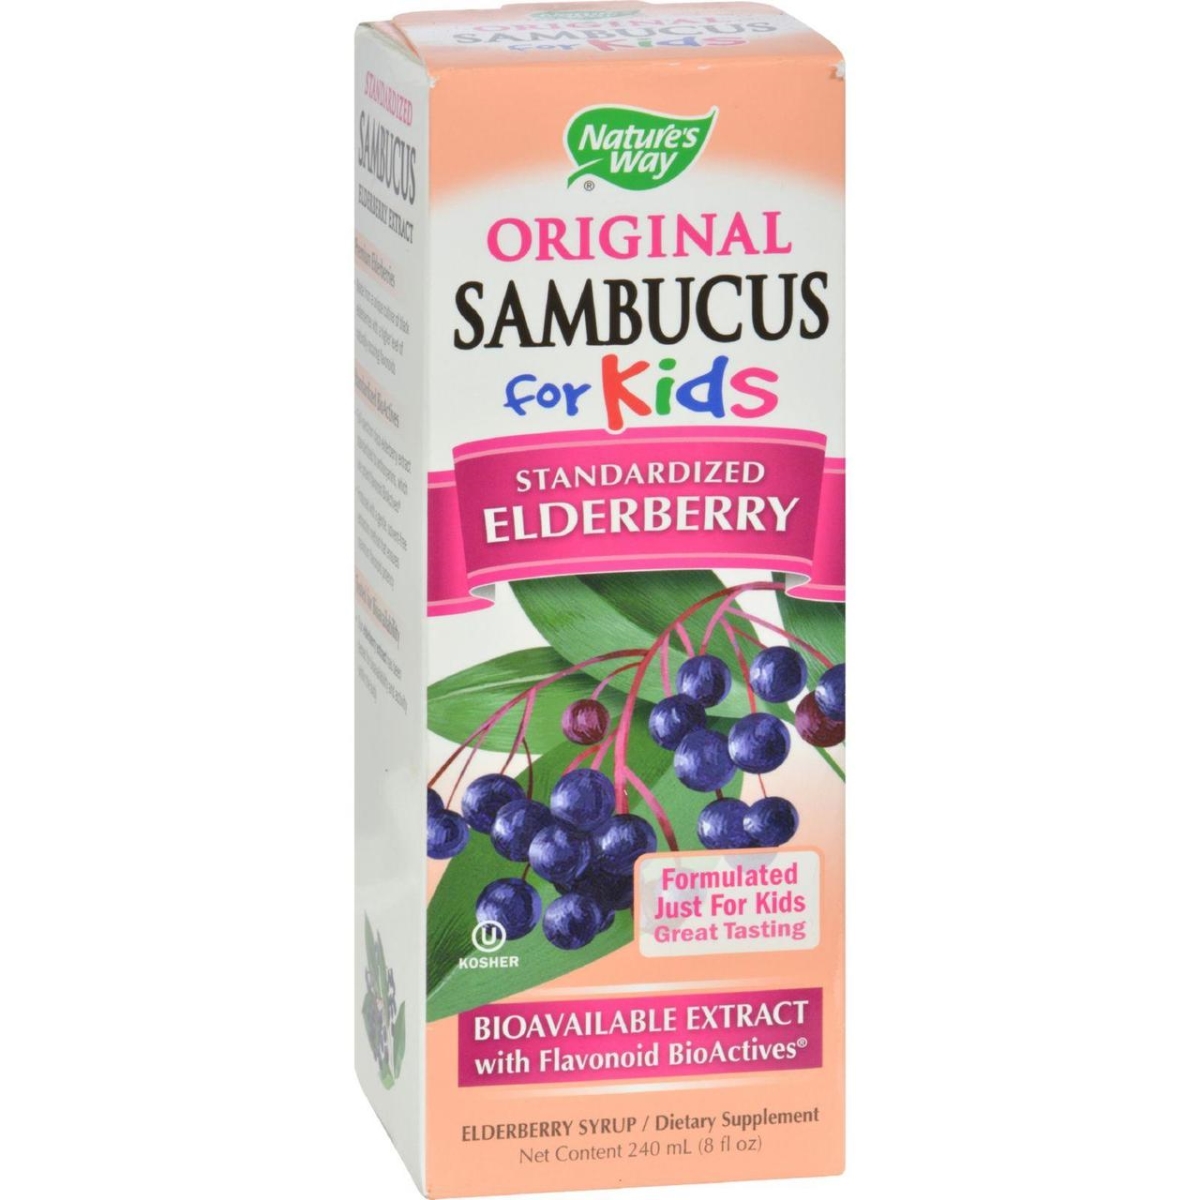 Hg0138495 8 Fl Oz Original Sambucus For Kids, Standardized Elderberry